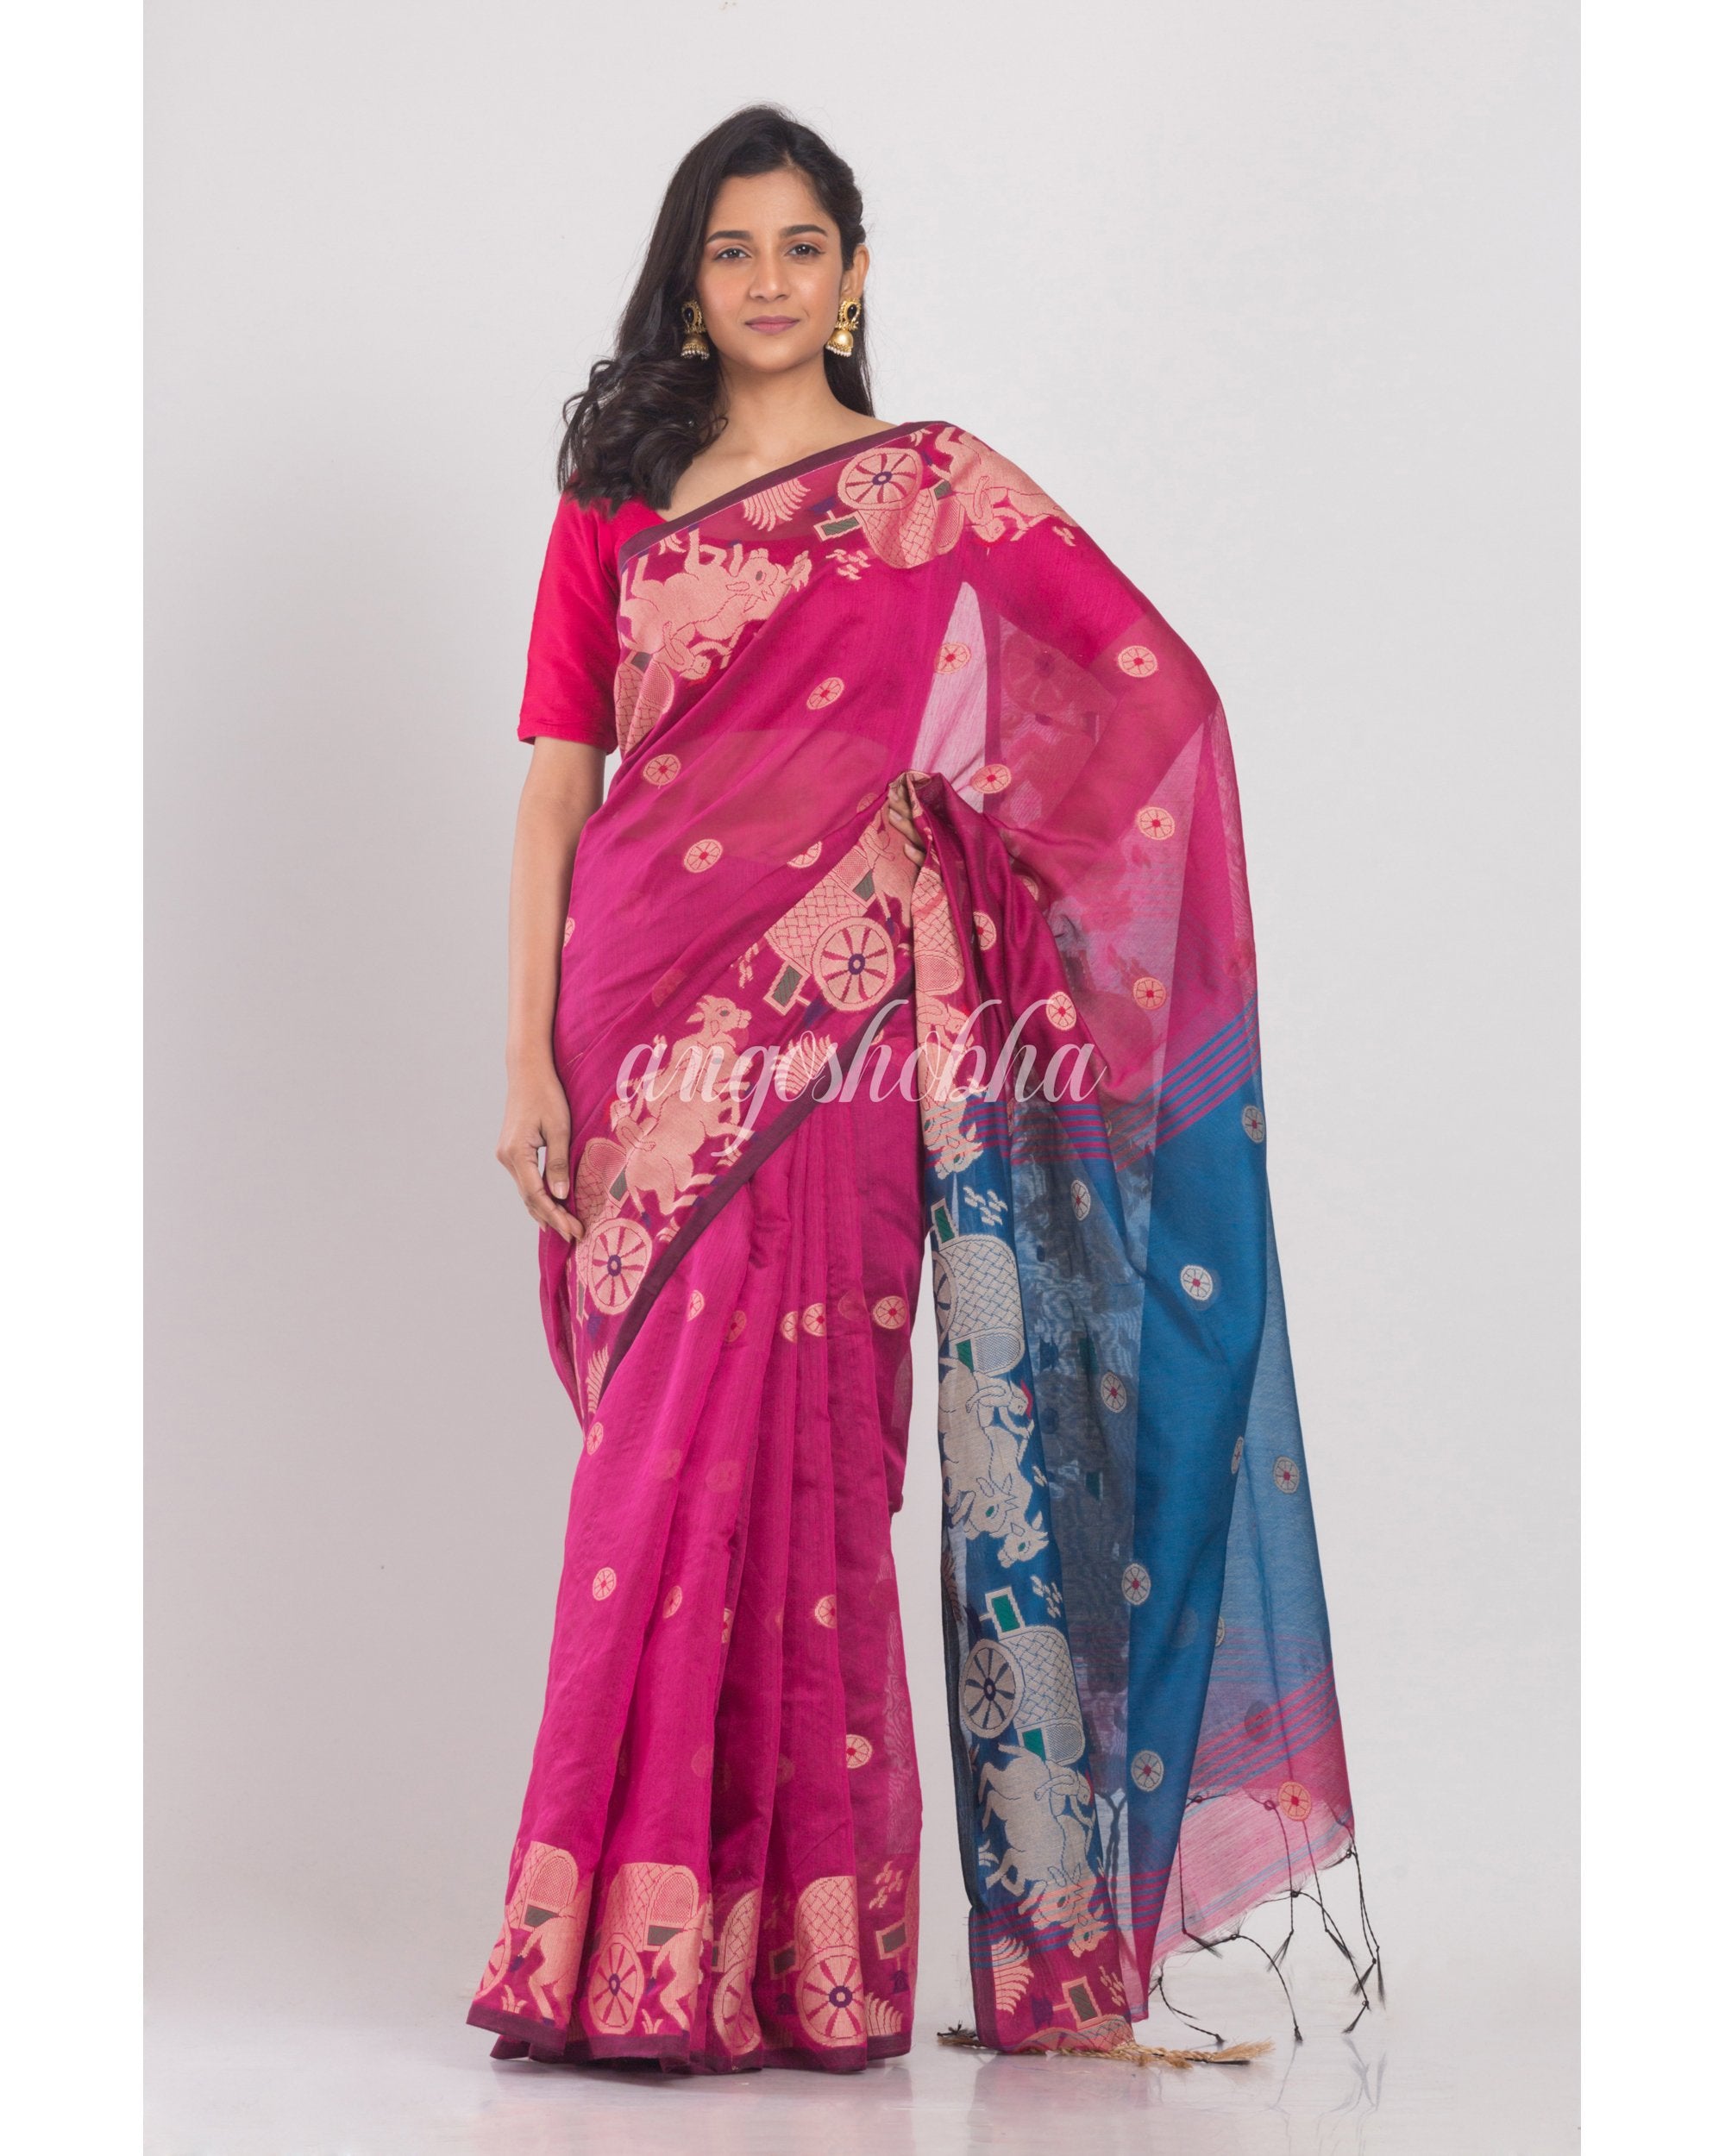 Women's Rani Pink Handloom Saree - Angoshobha